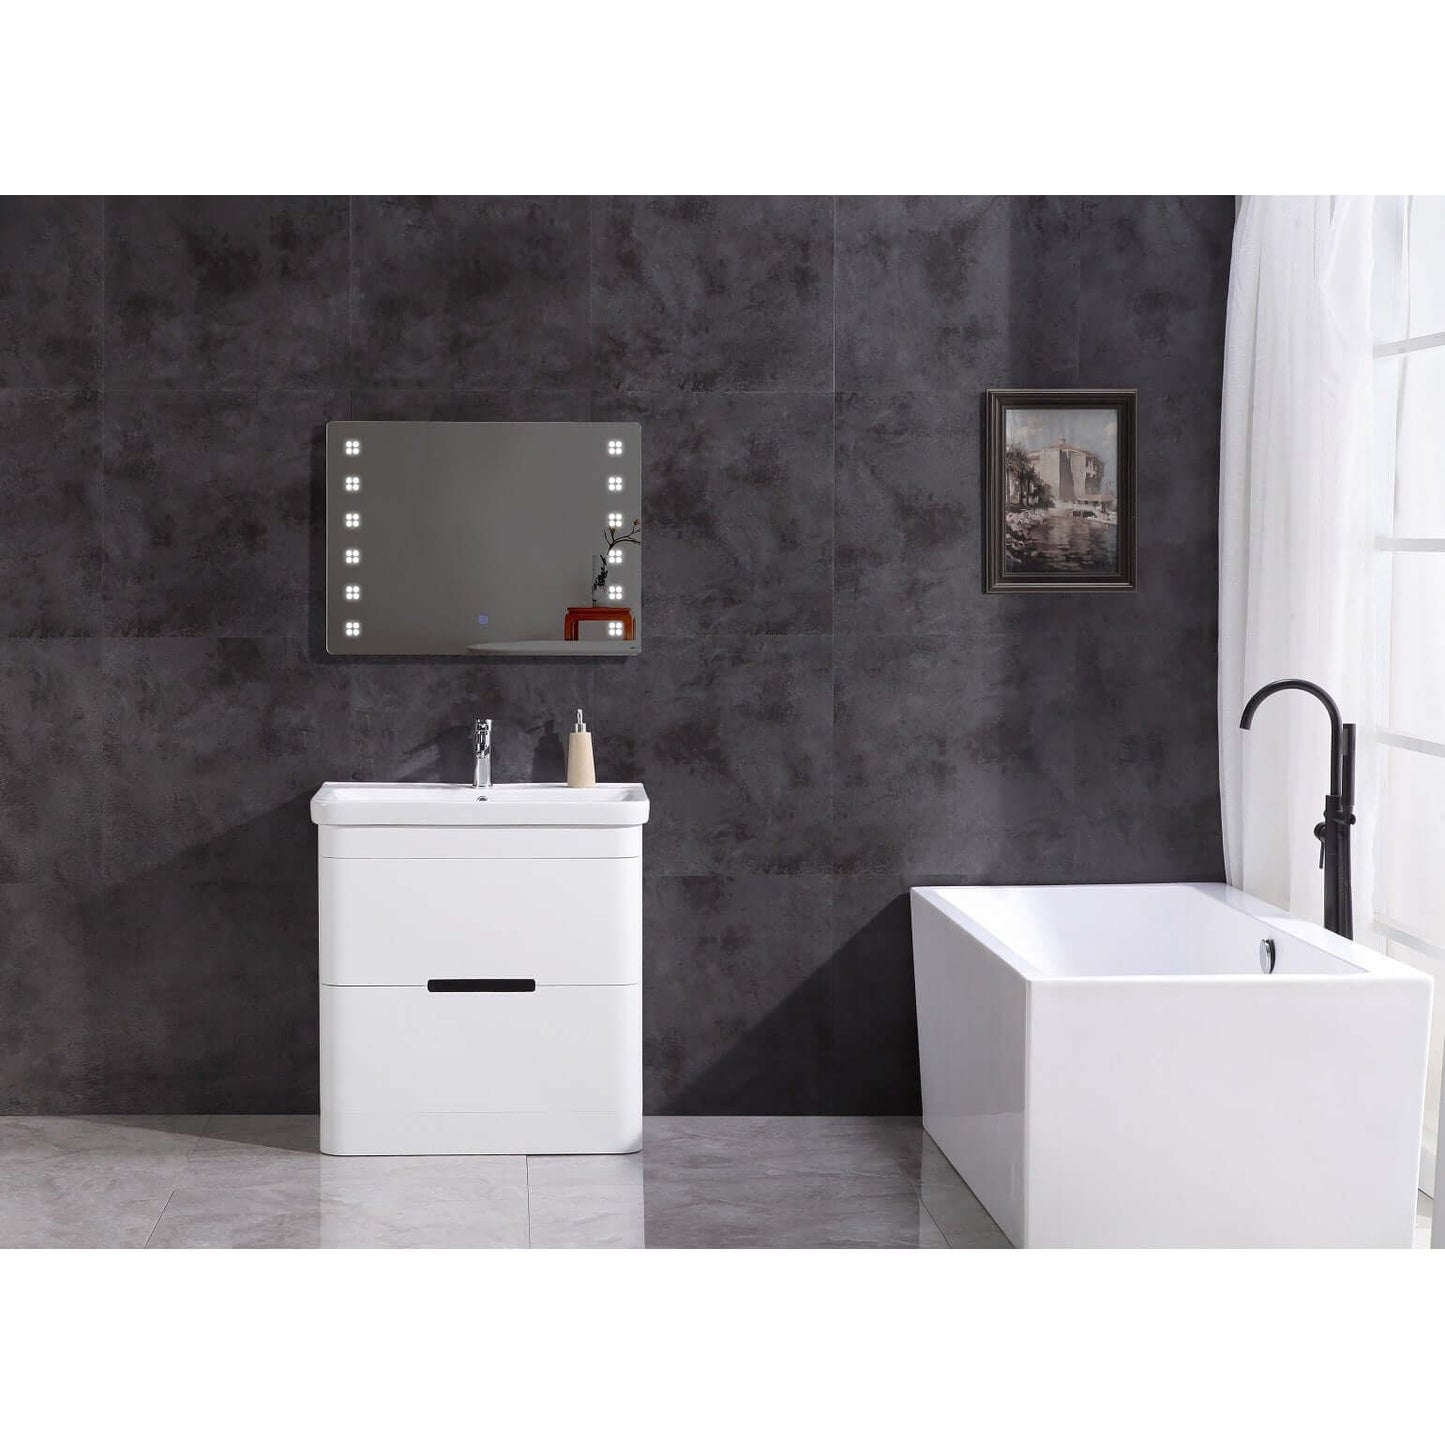 32" Bathroom Vanity With Led Mirror- Pvc - WT9329-32-PVC